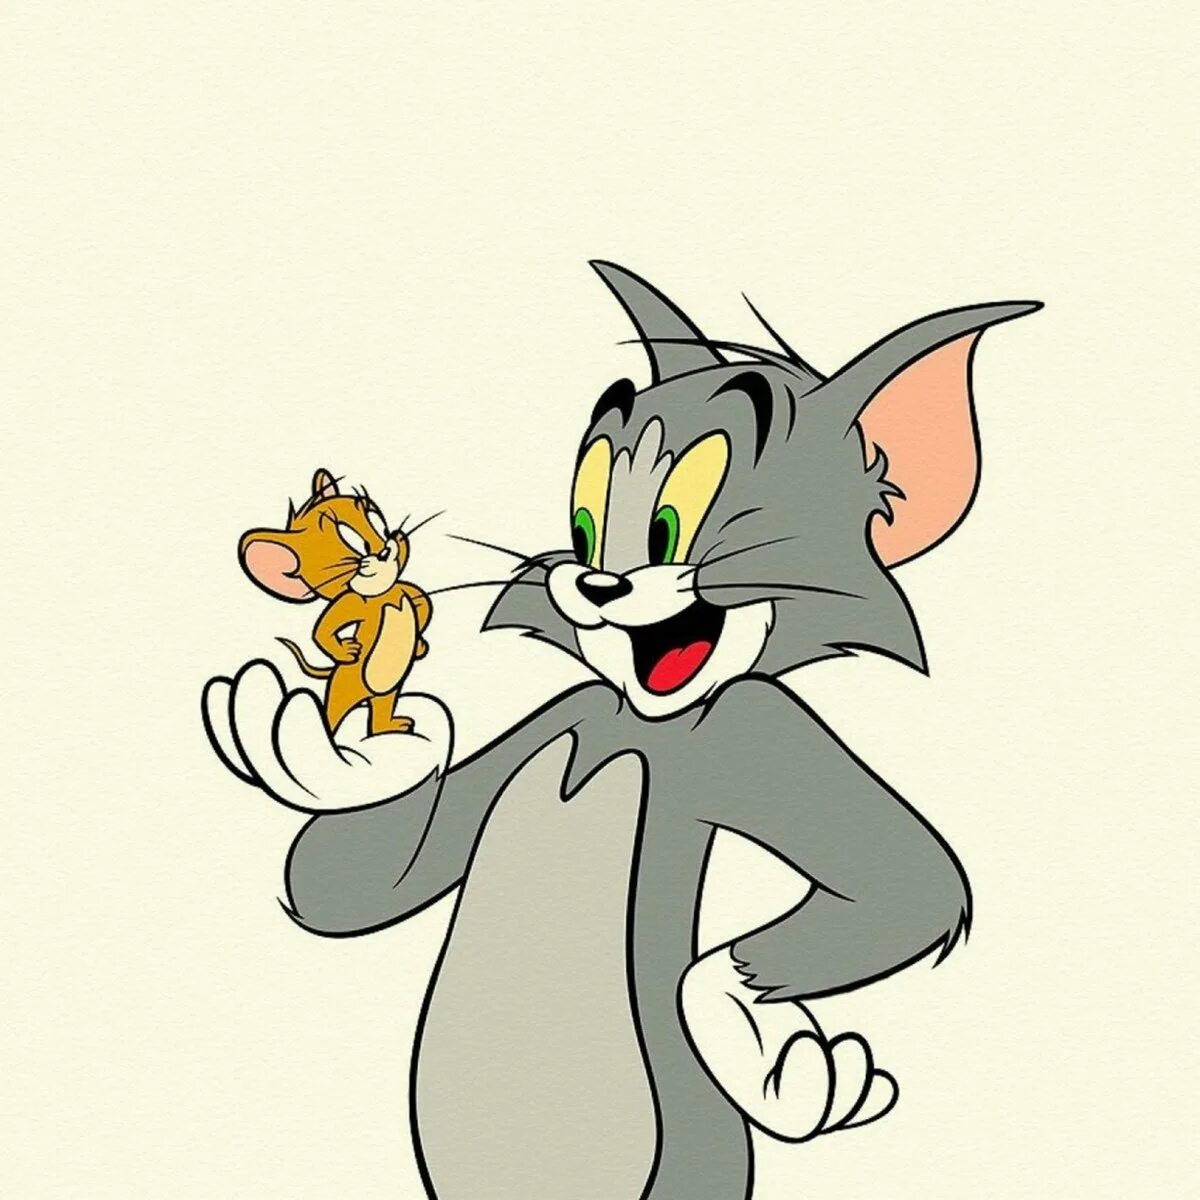 1 й том. Tom and Jerry. Tom из том и Джерри. Том и Джерри 1963. Джерри из том и Джерри.